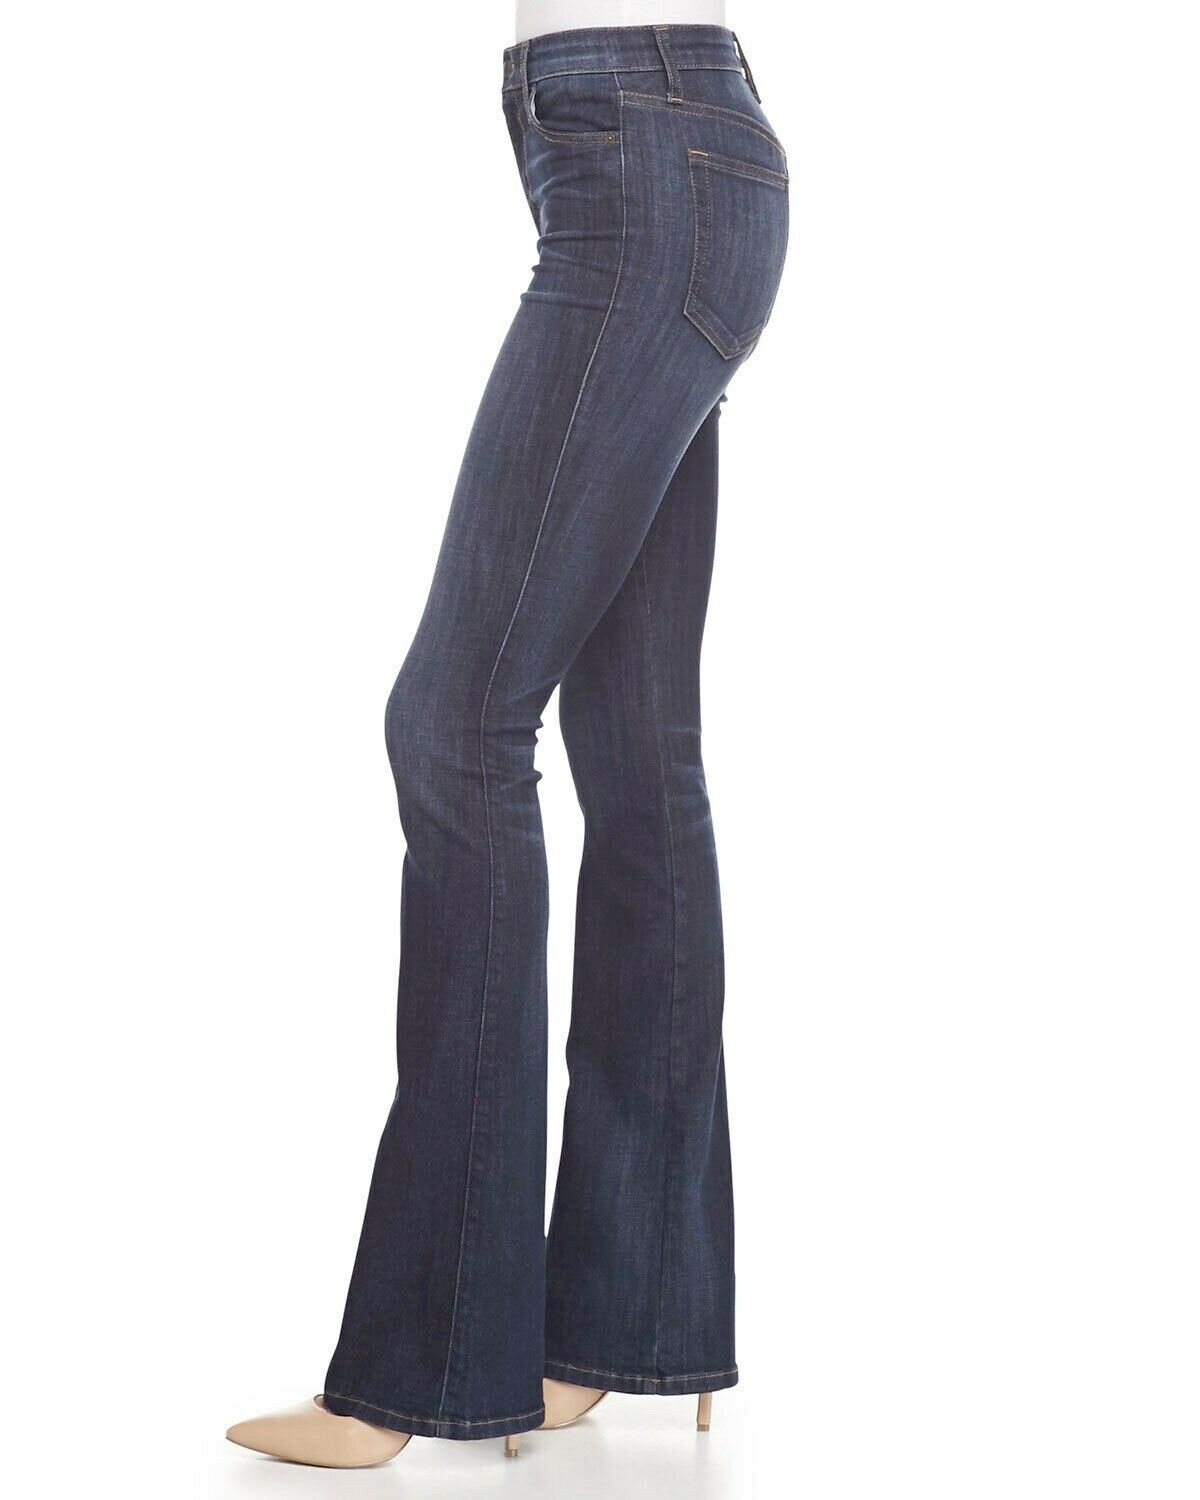 New JOE'S JEANS Samantha High rise flair jeans denim 32 X 34 super soft